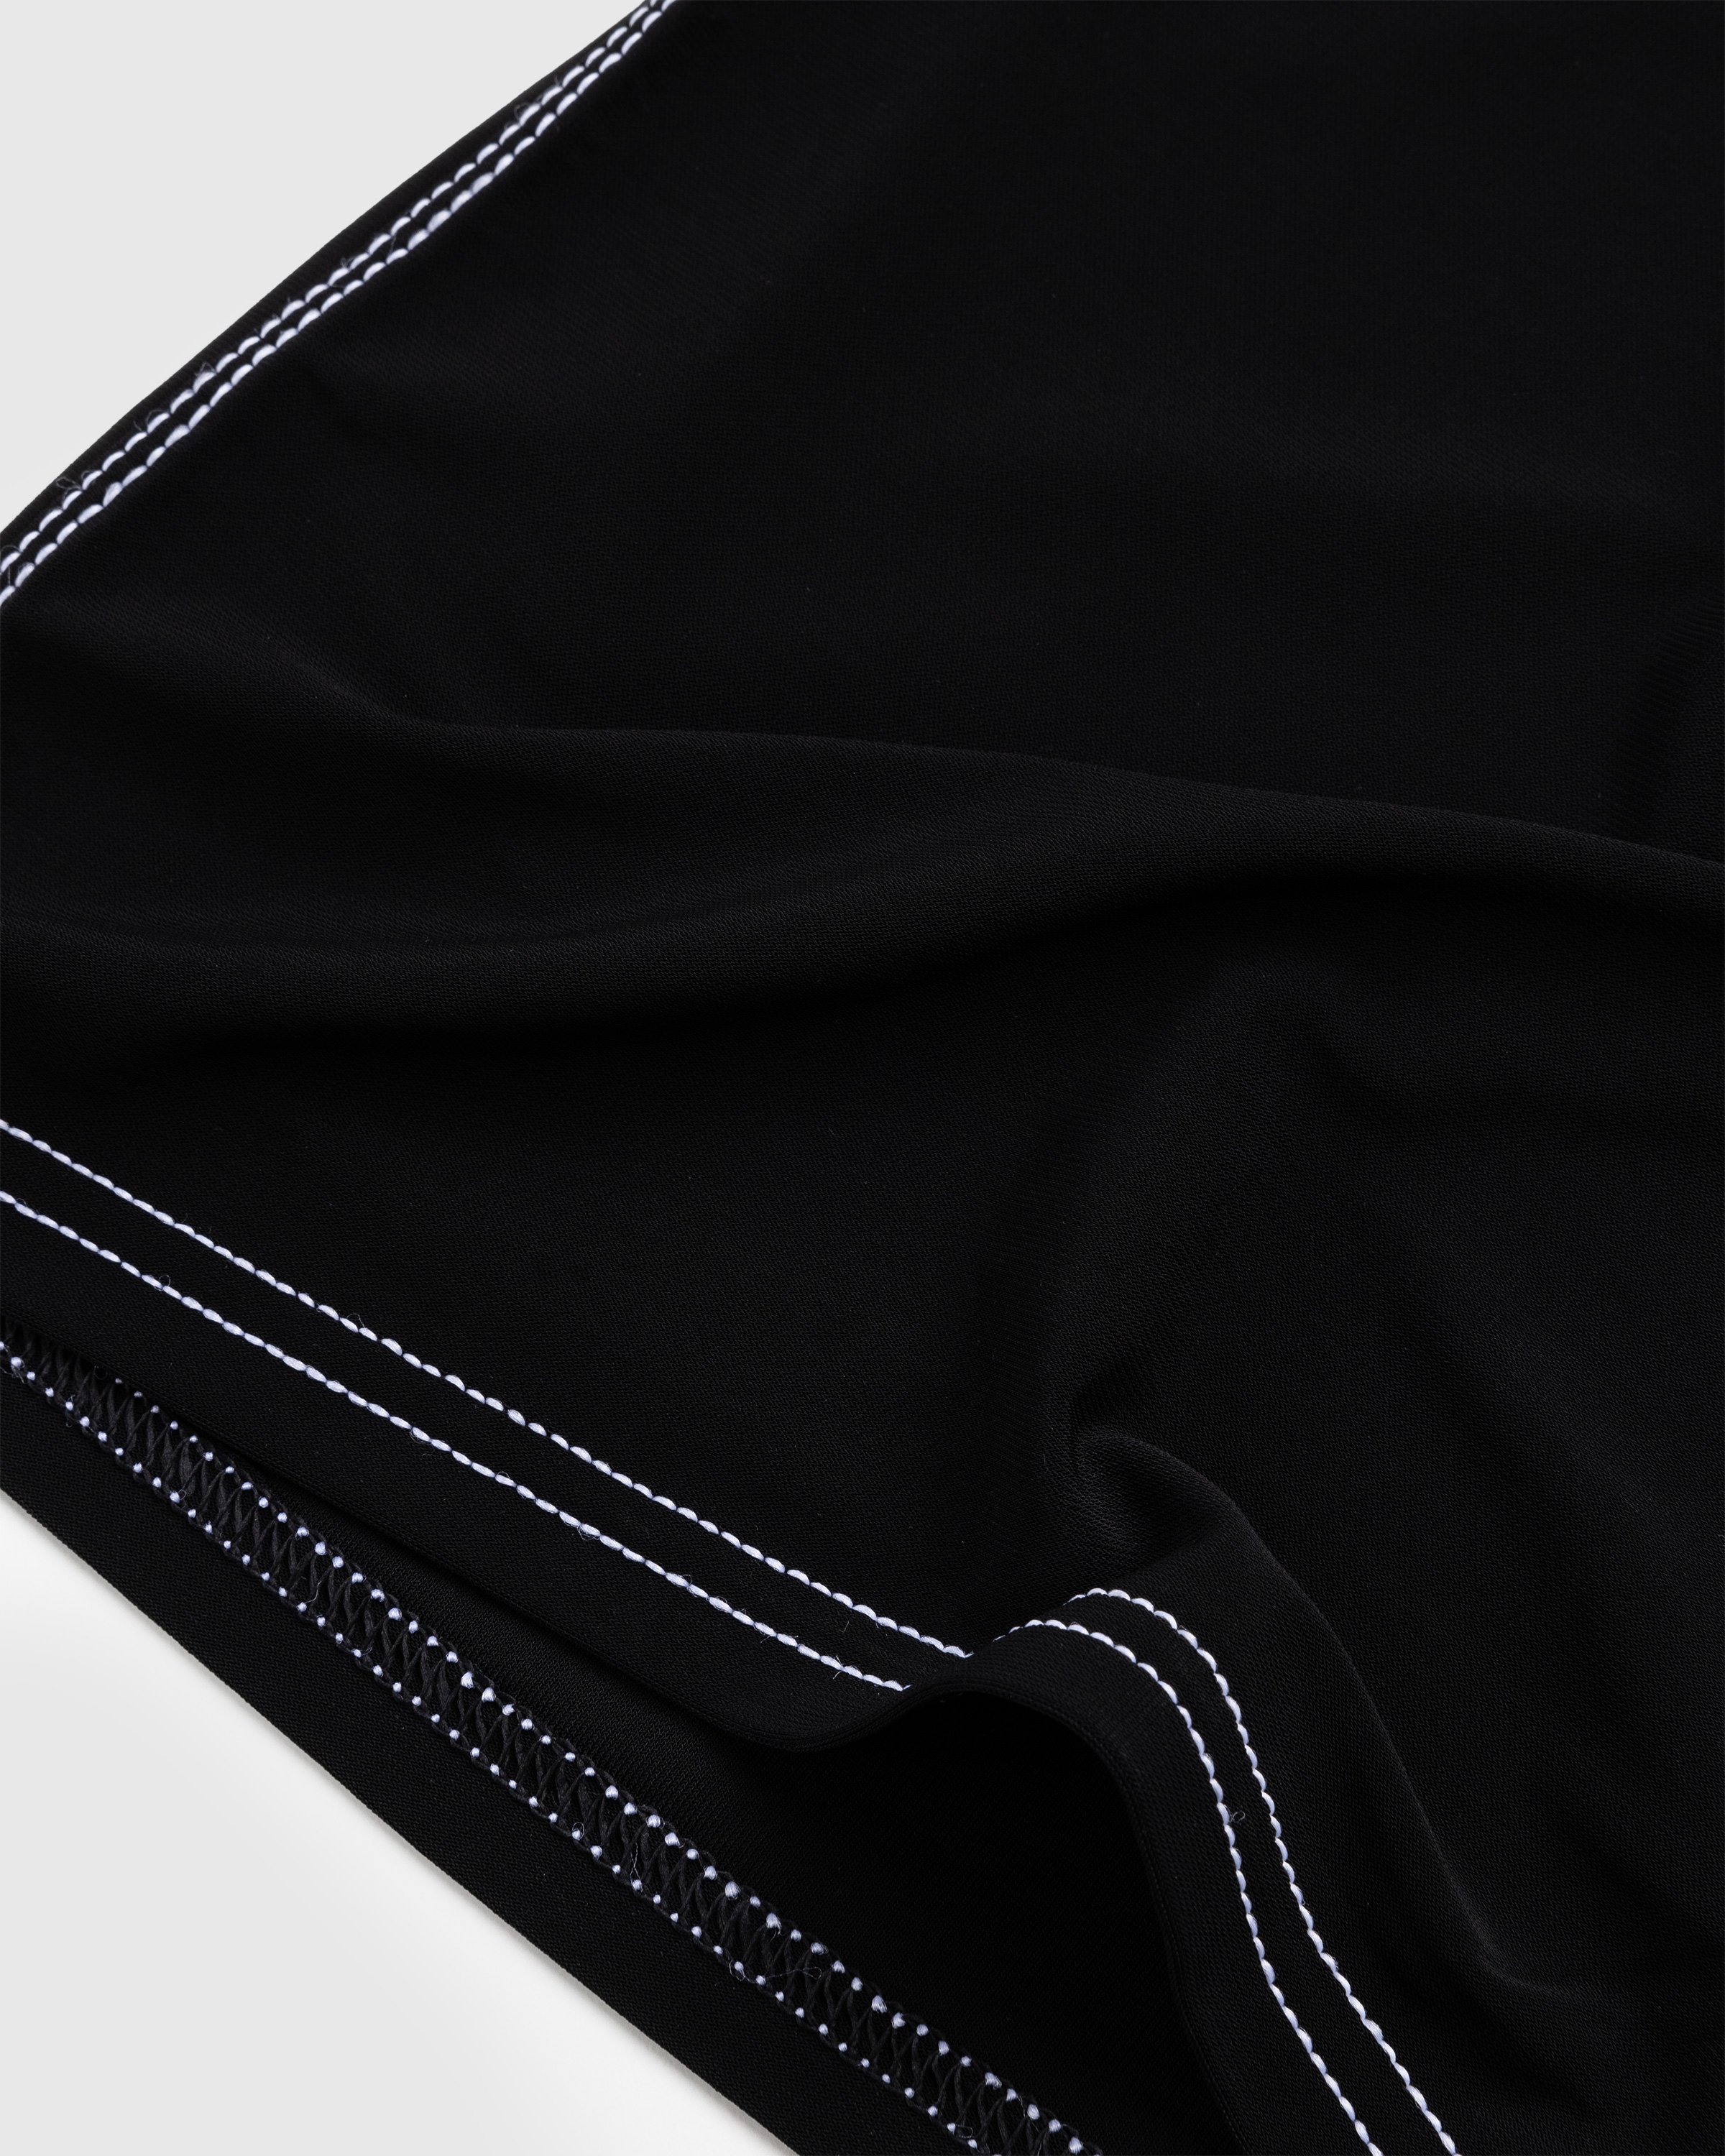 Marine Serre - Fluid Jersey Baggy Pants Black - Clothing - undefined - Image 5